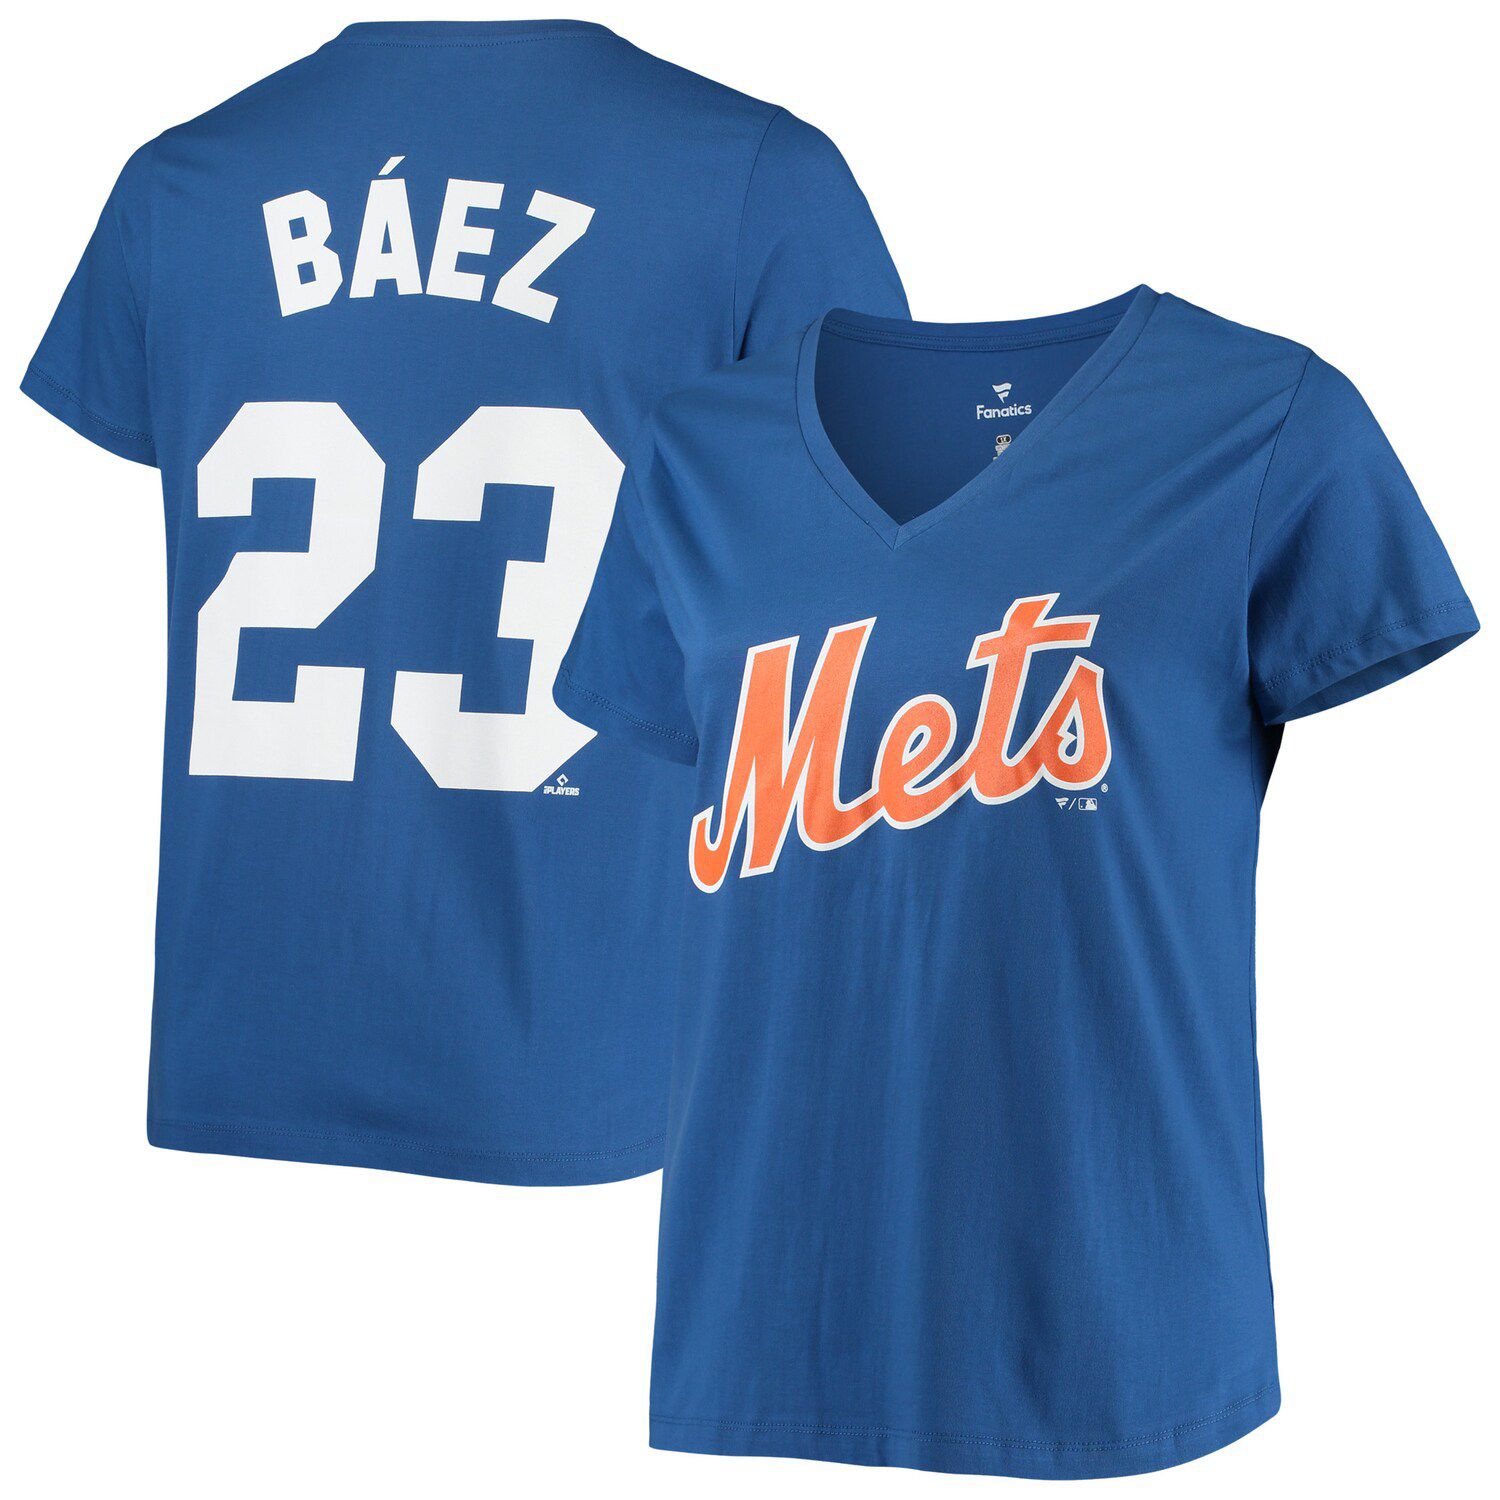 Image for Unbranded Women's Javier Baez Royal New York Mets Plus Size Name & Number V-Neck T-Shirt at Kohl's.